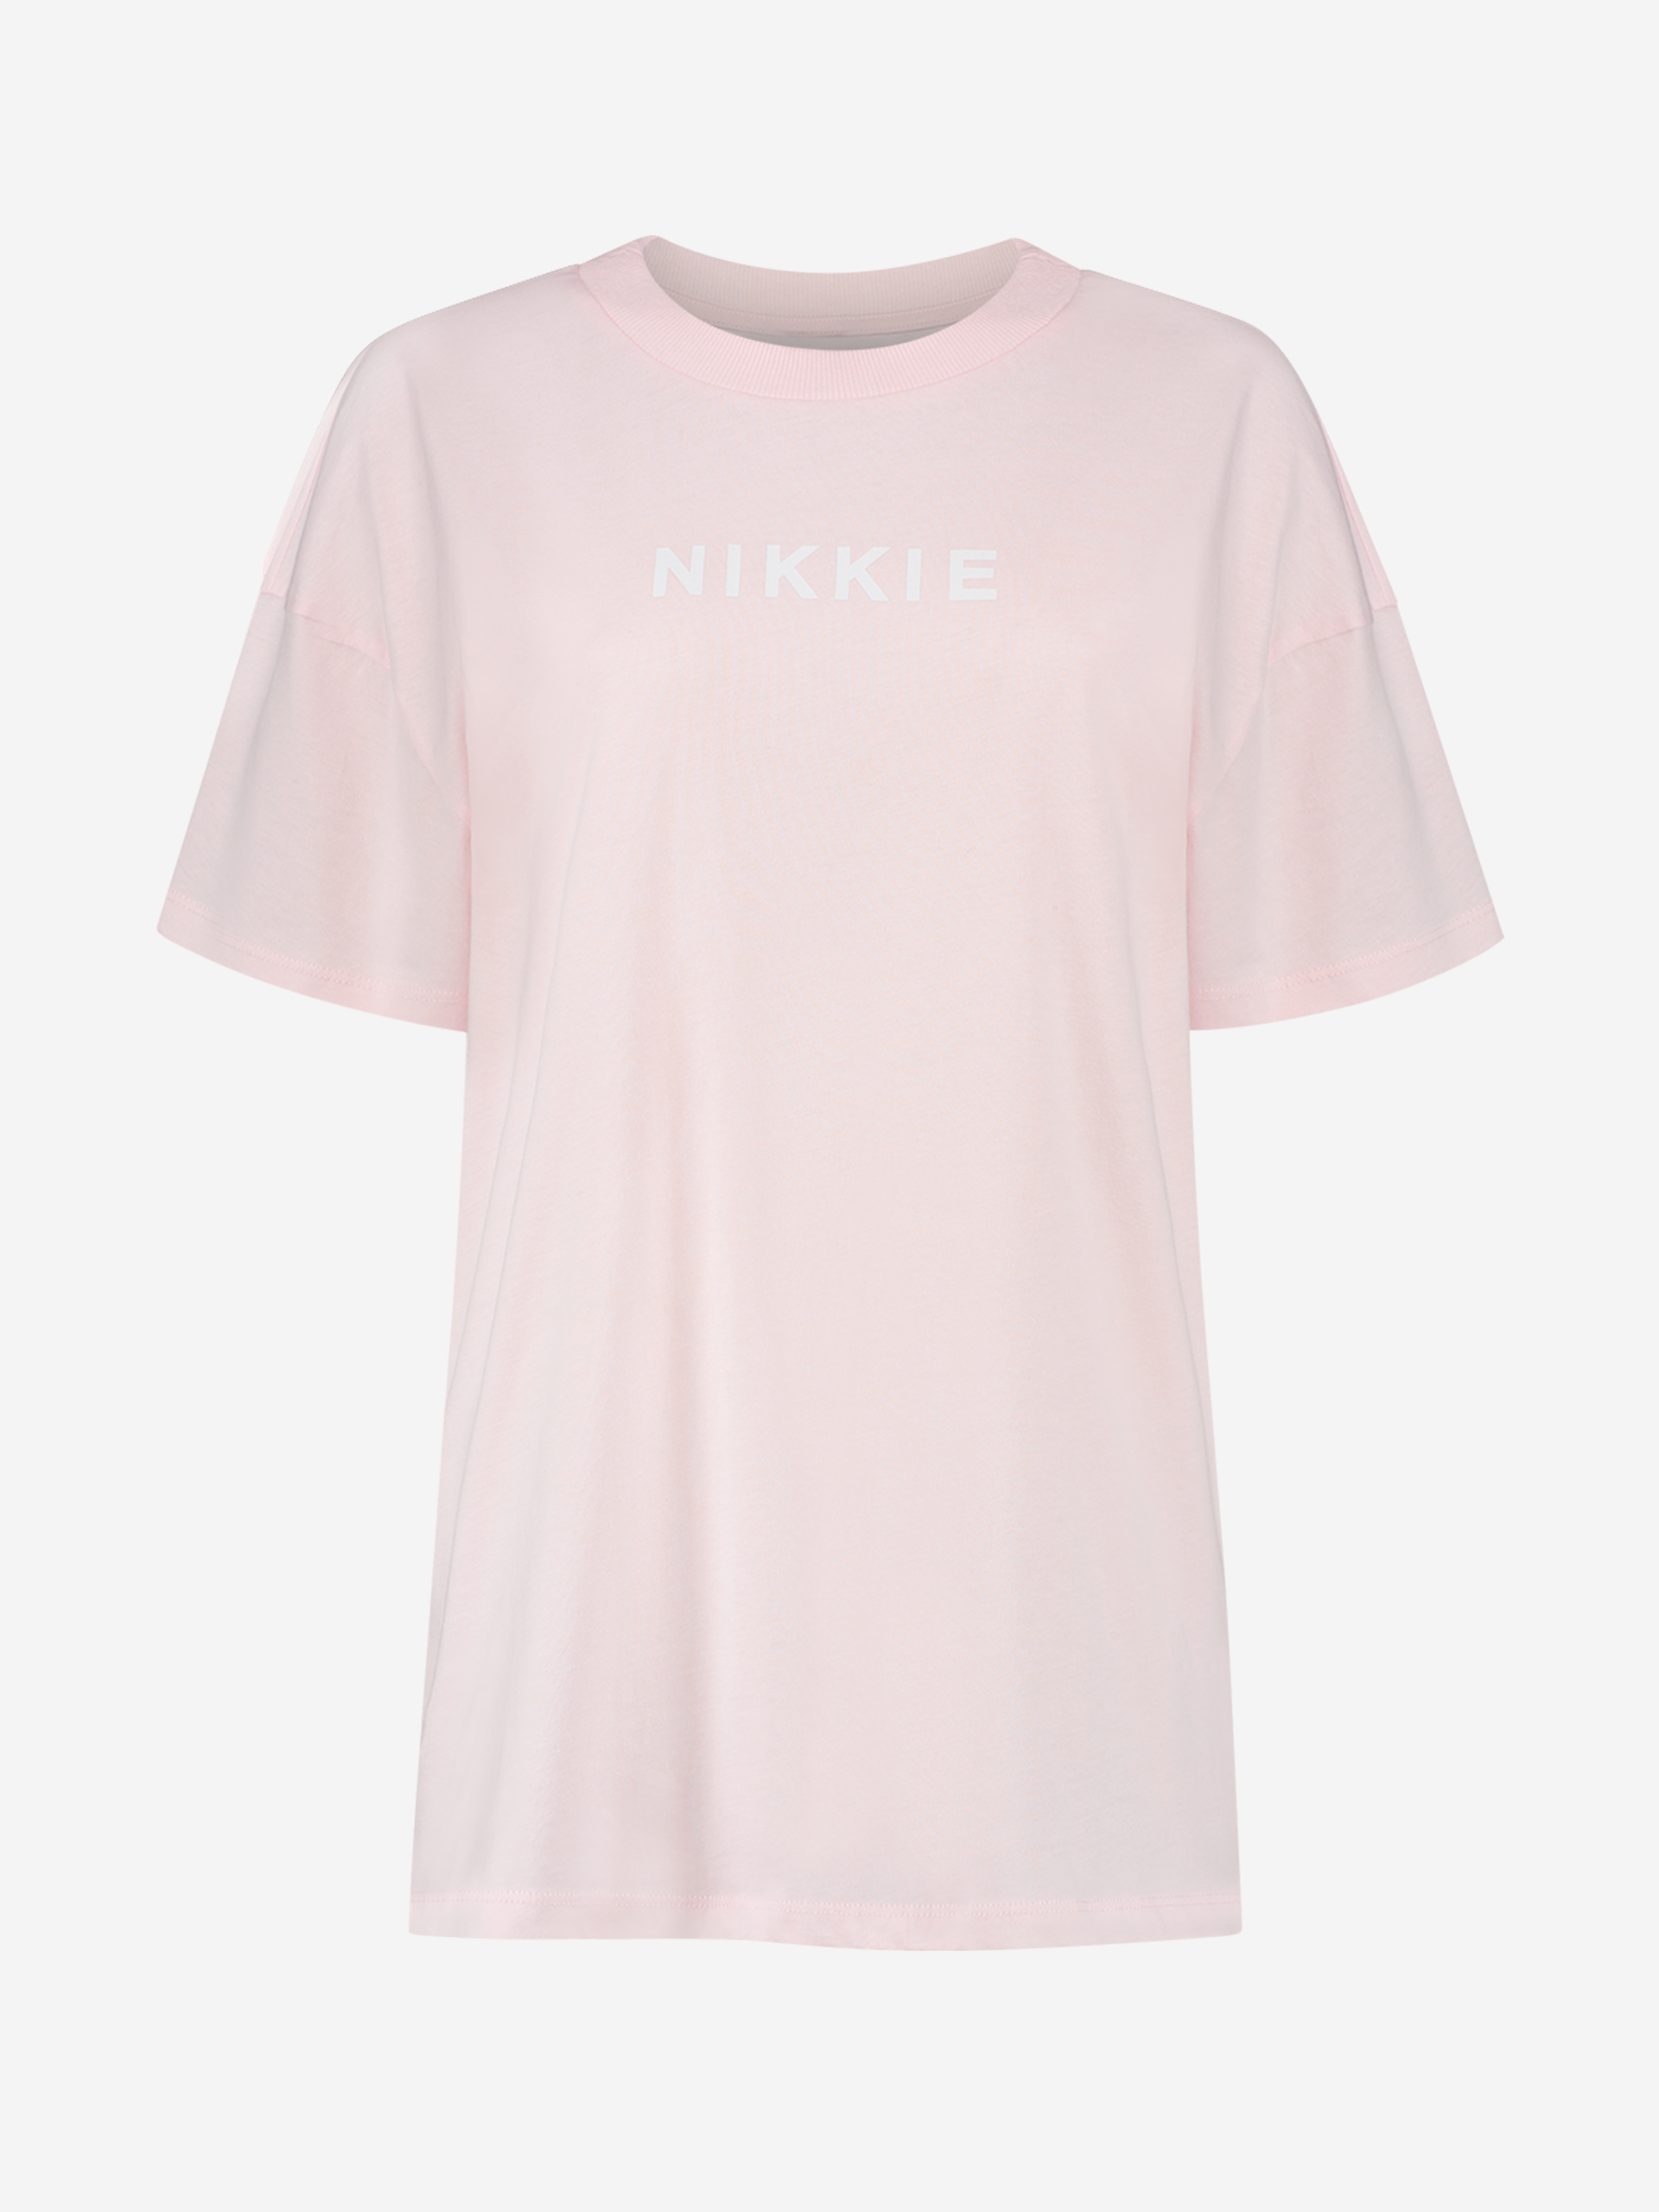 NIKKIE Logo T-shirt